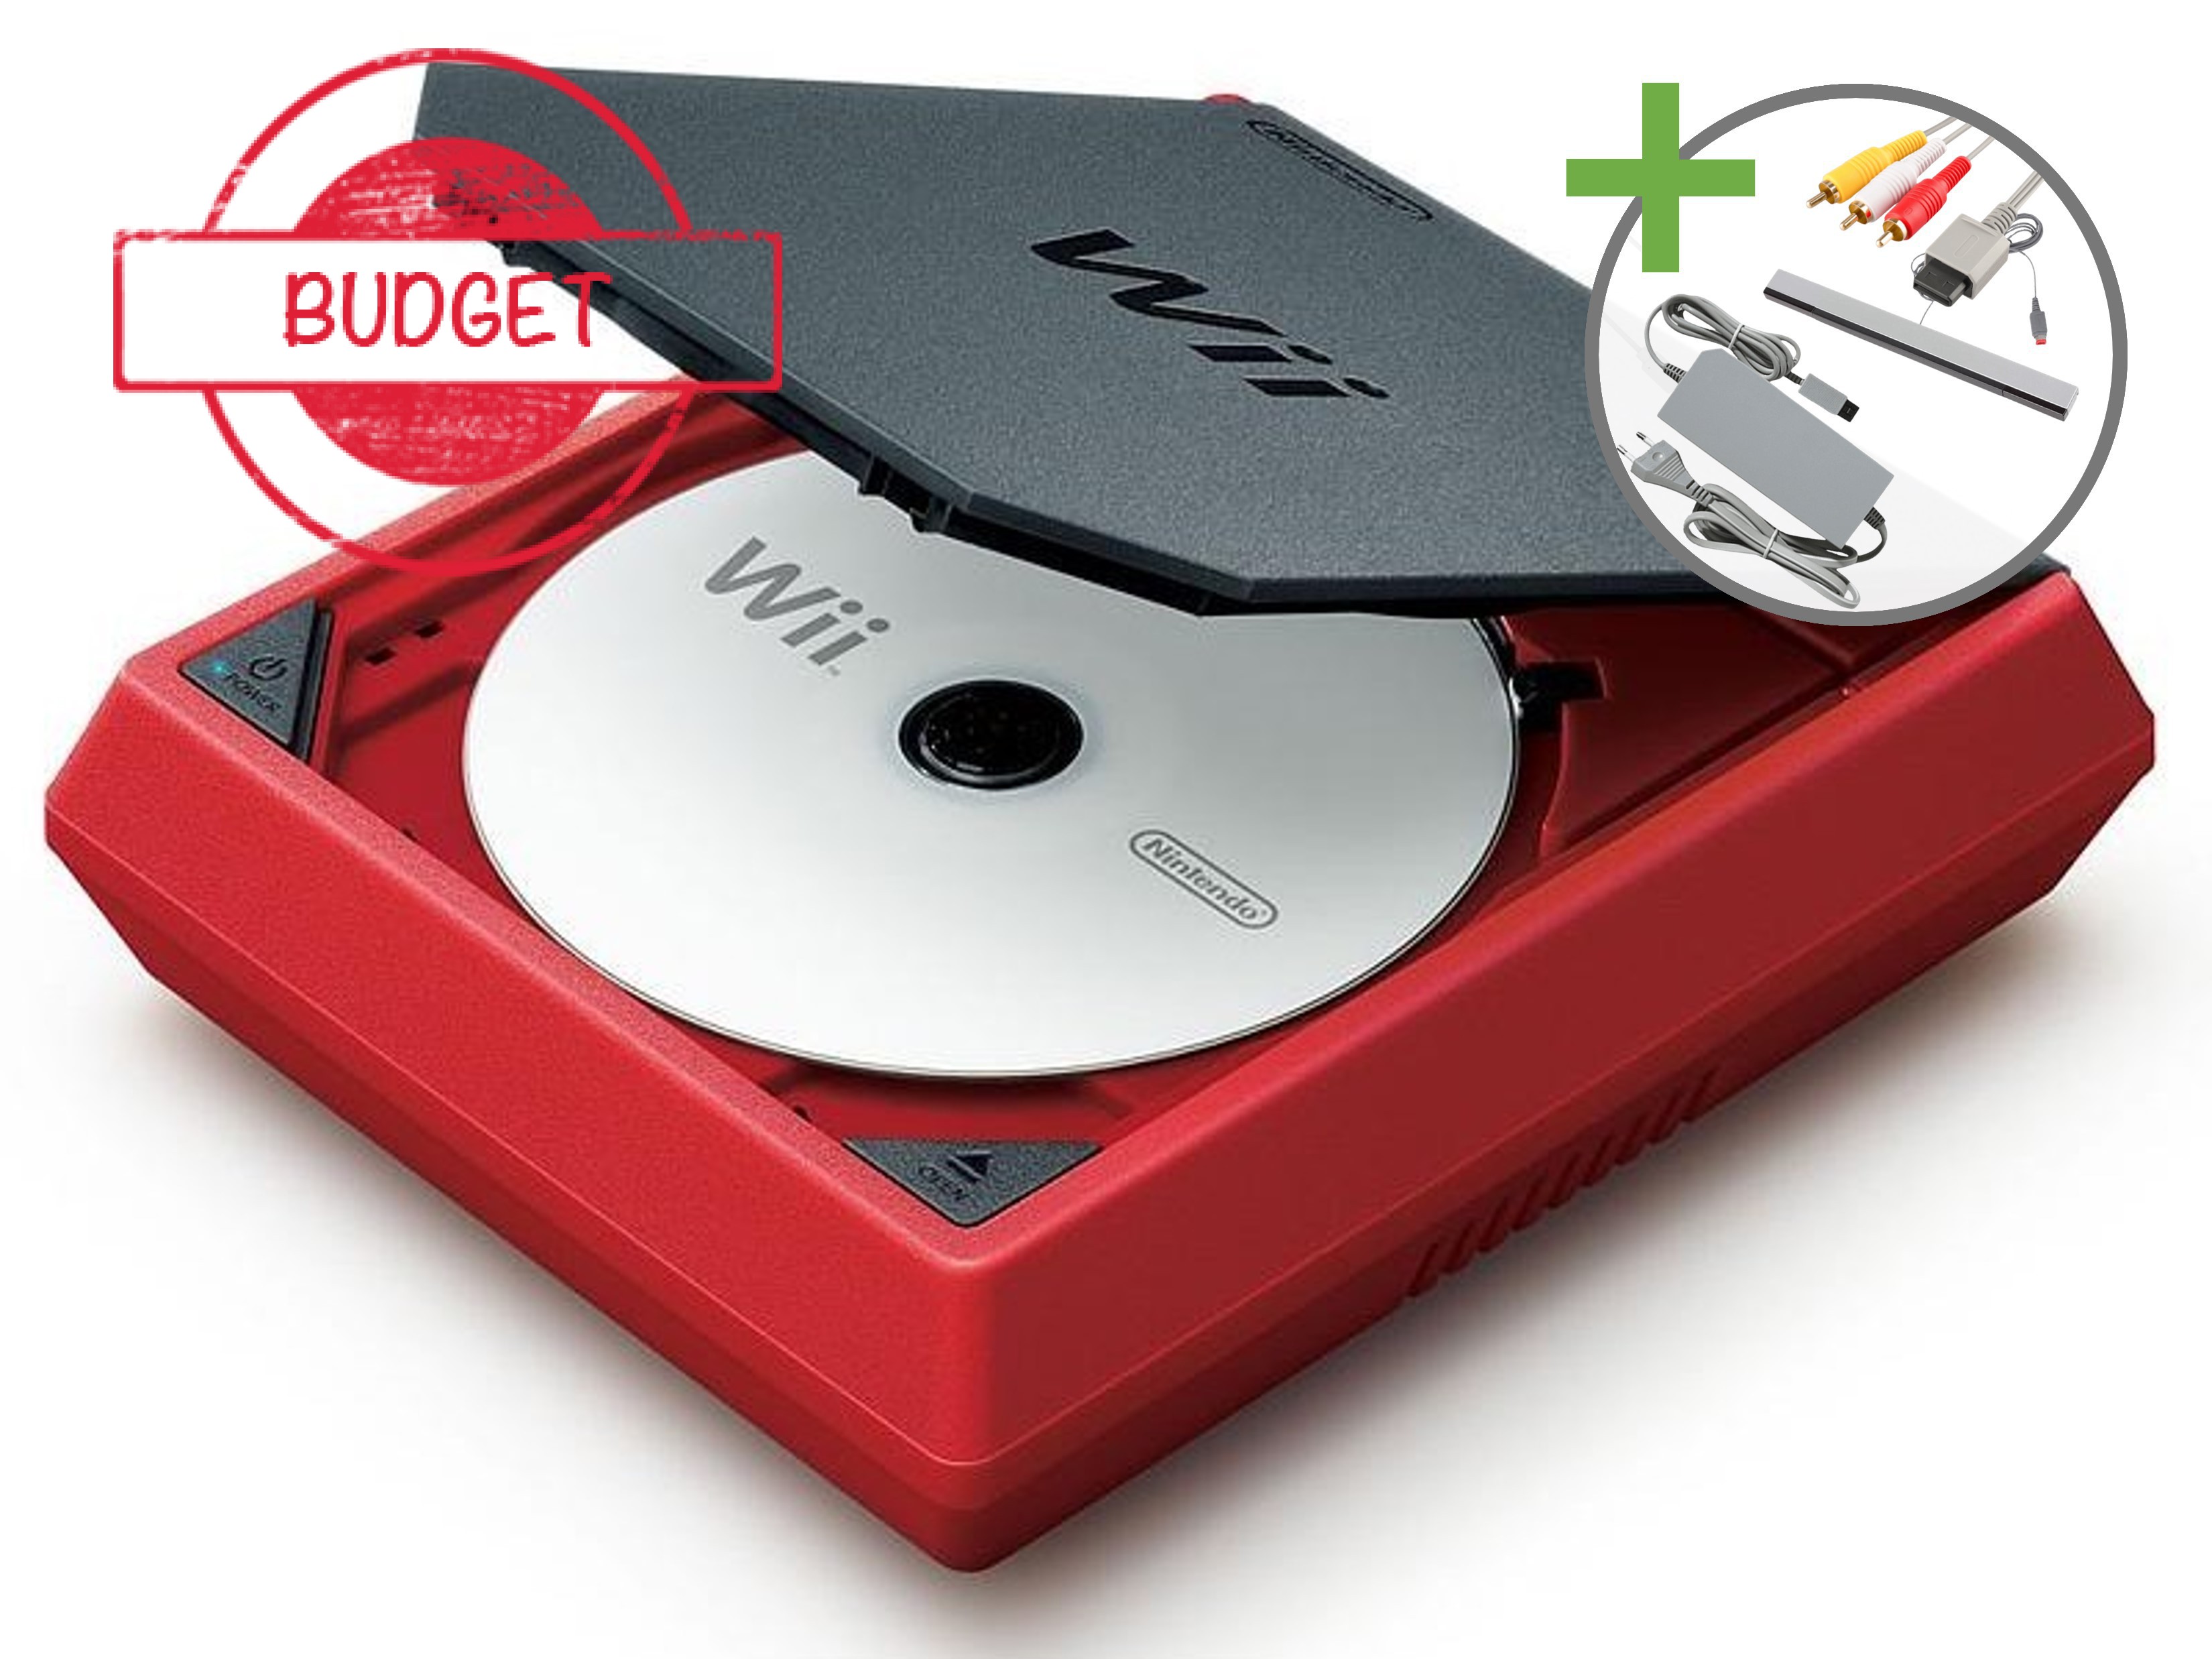 Nintendo Wii Mini Starter Pack - Mario Kart Wii Edition - Budget - Wii Hardware - 2